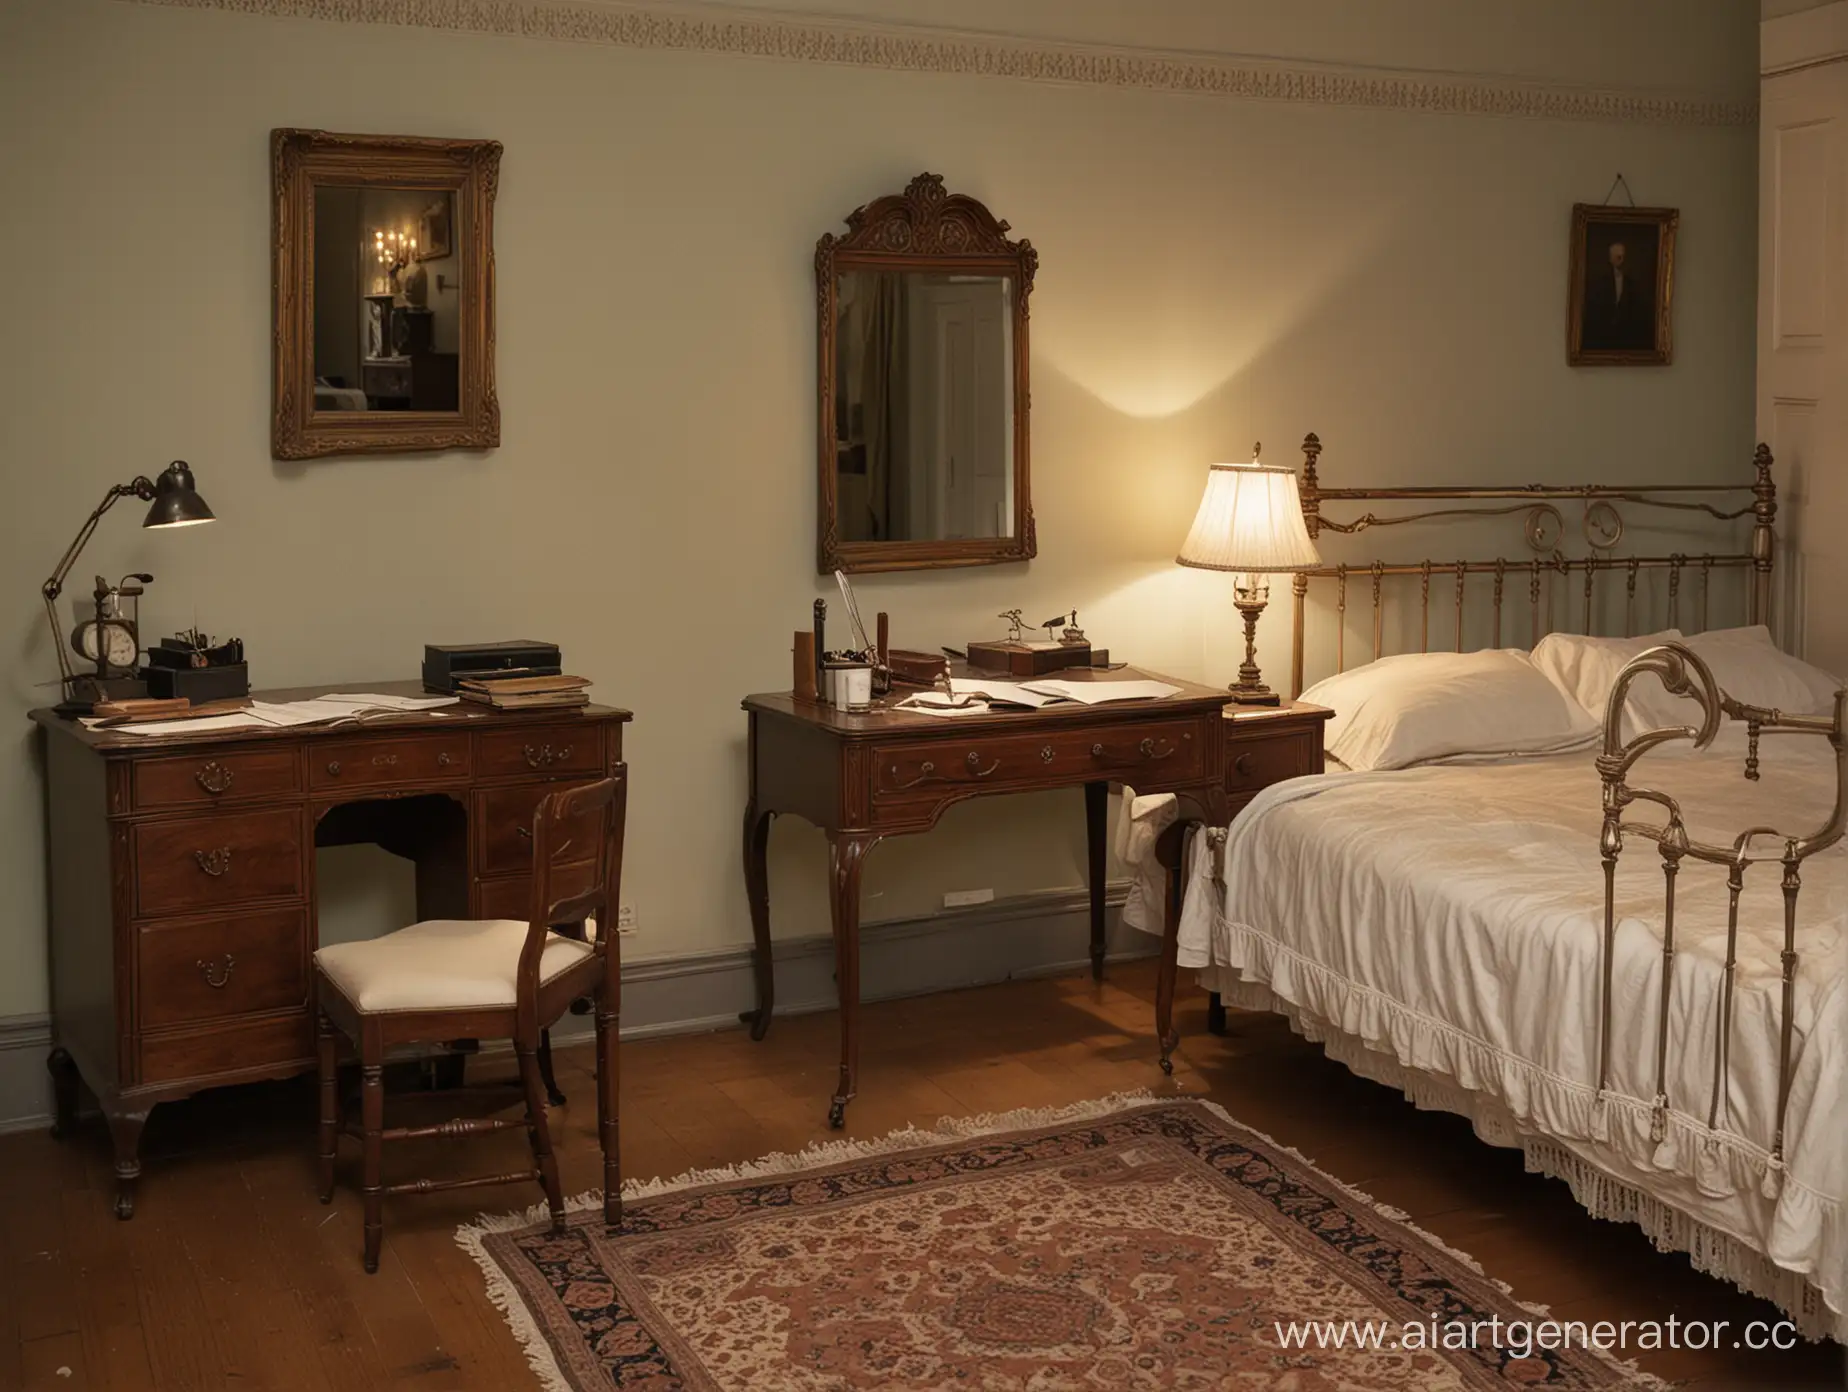 Nighttime-Scene-of-19thCentury-Bedroom-with-Writing-Desk